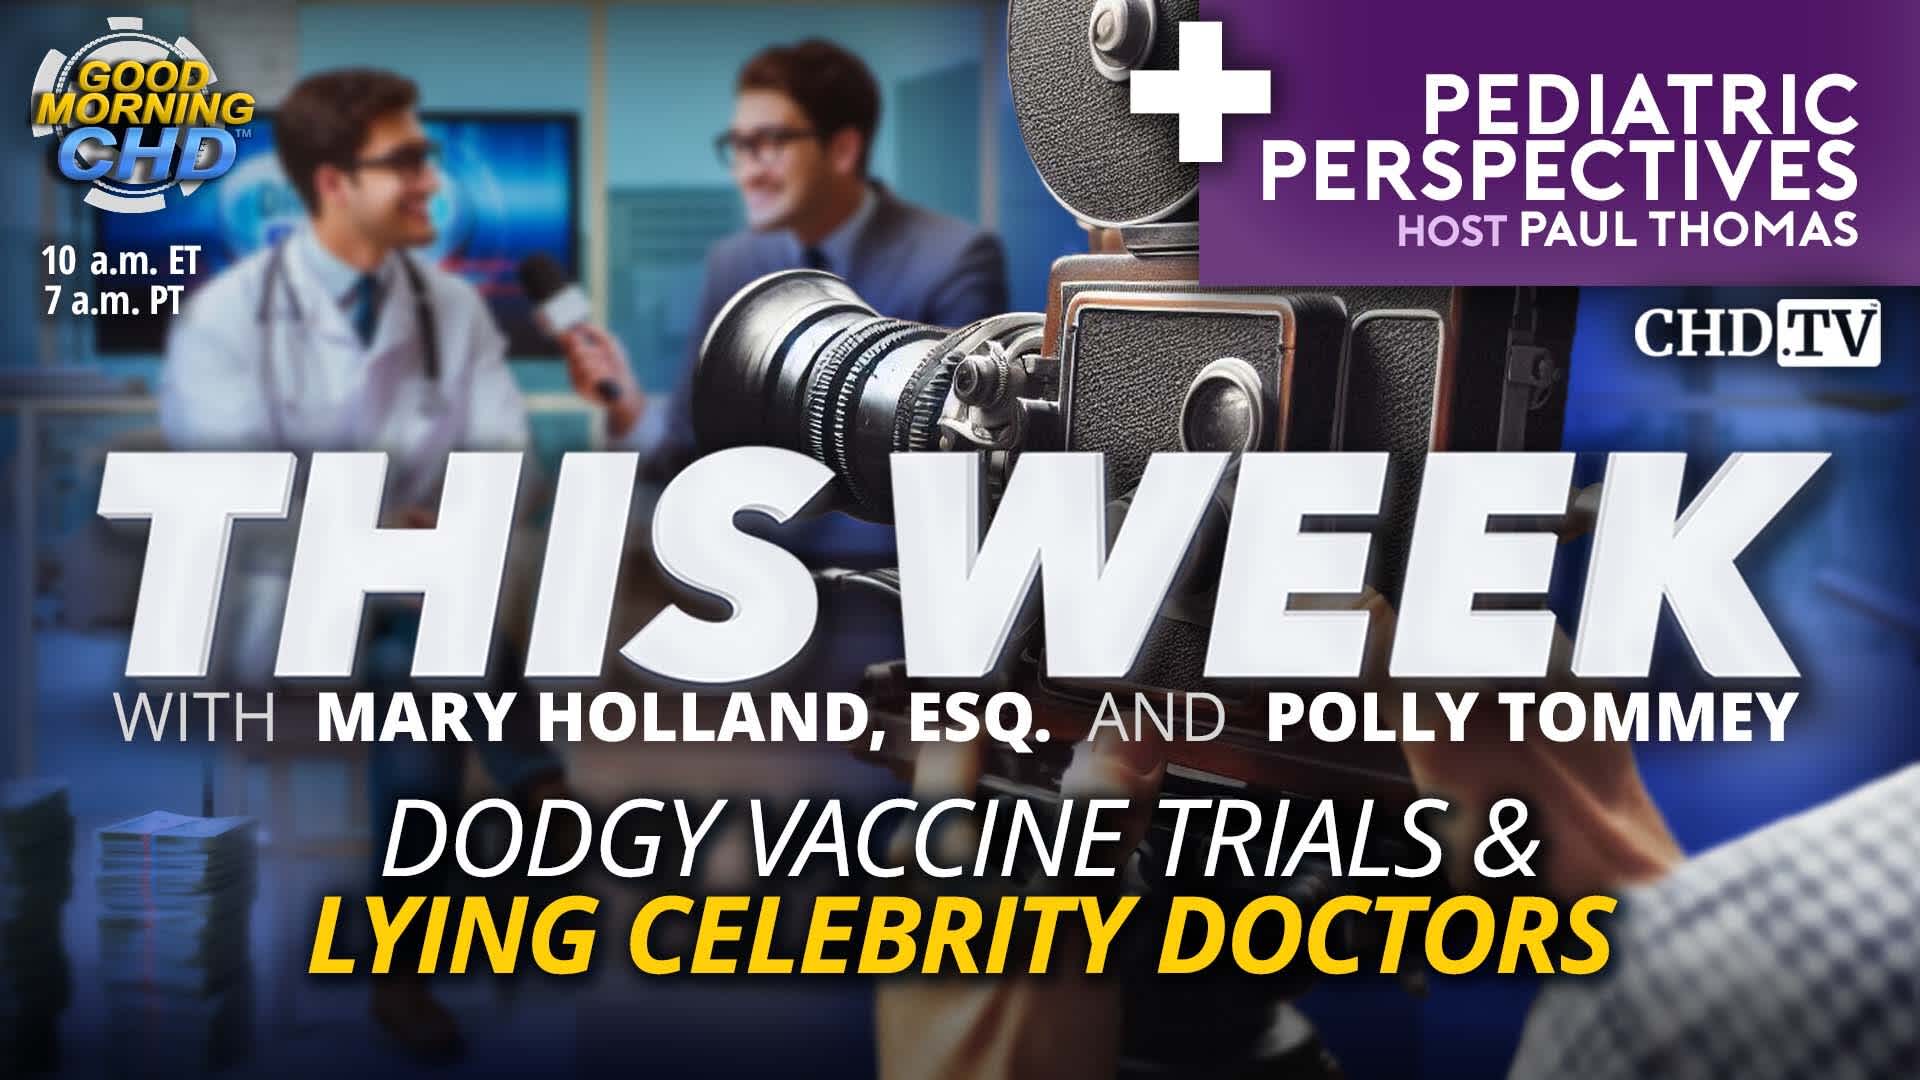 Dodgy Vaccine Trials & Lying Celebrity Doctors